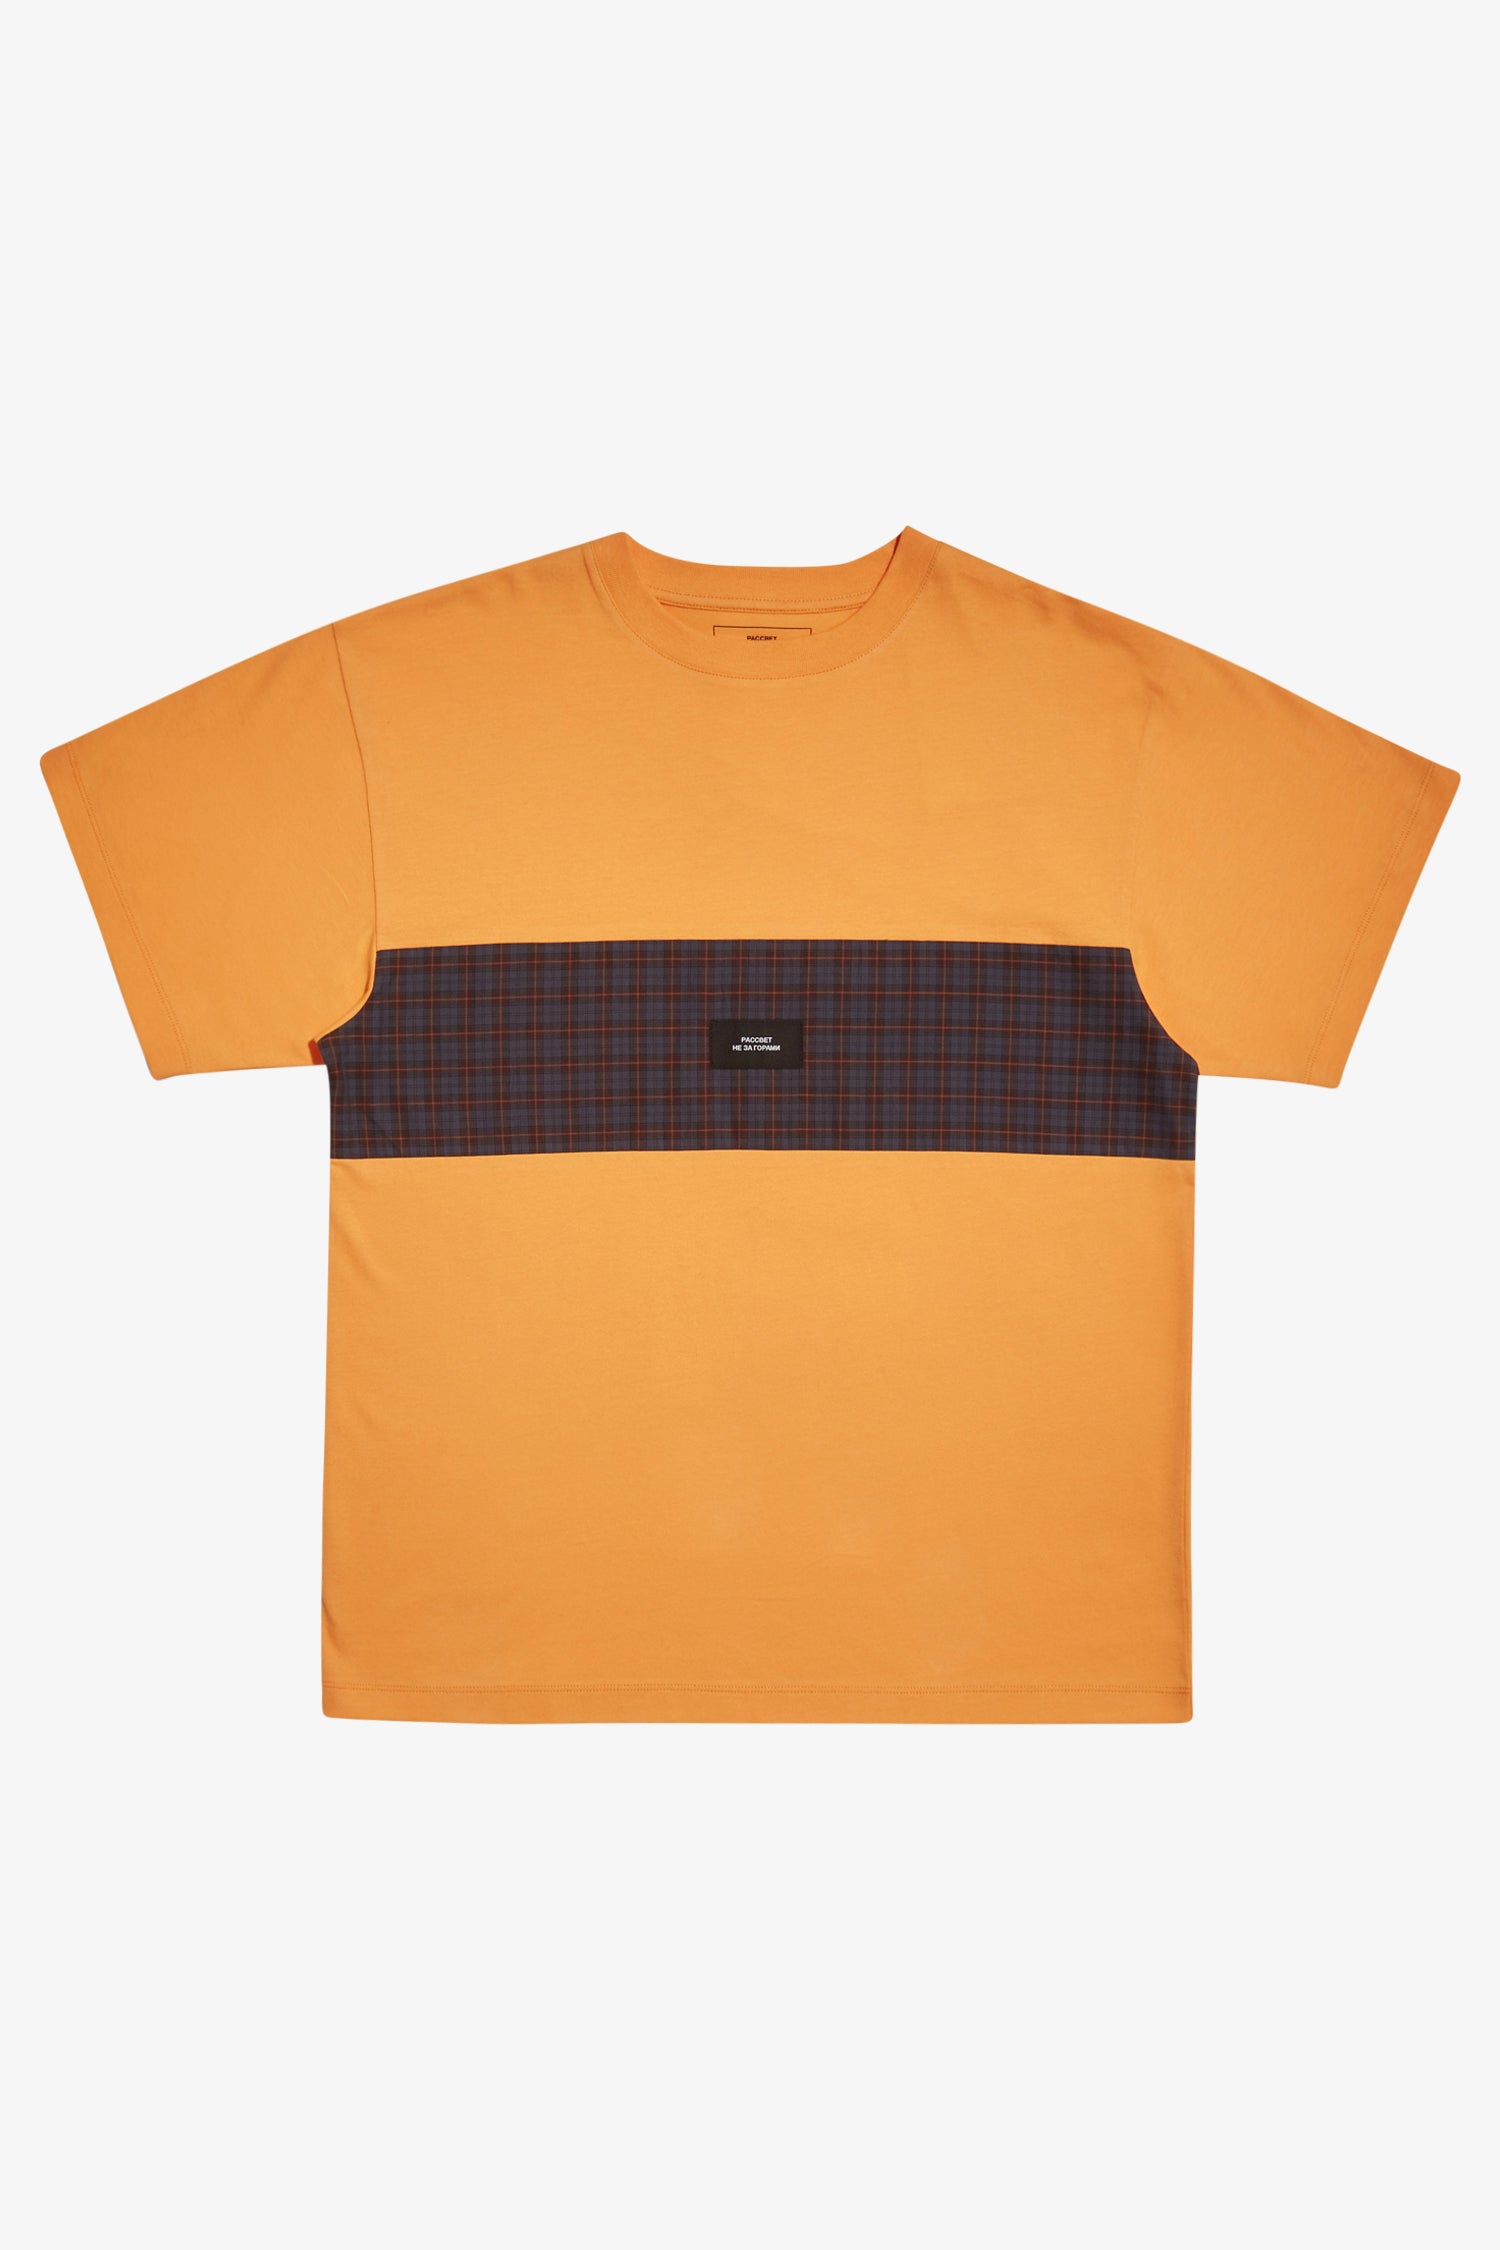 Selectshop FRAME - RASSVET Flannel Band T-Shirt T-Shirt Dubai